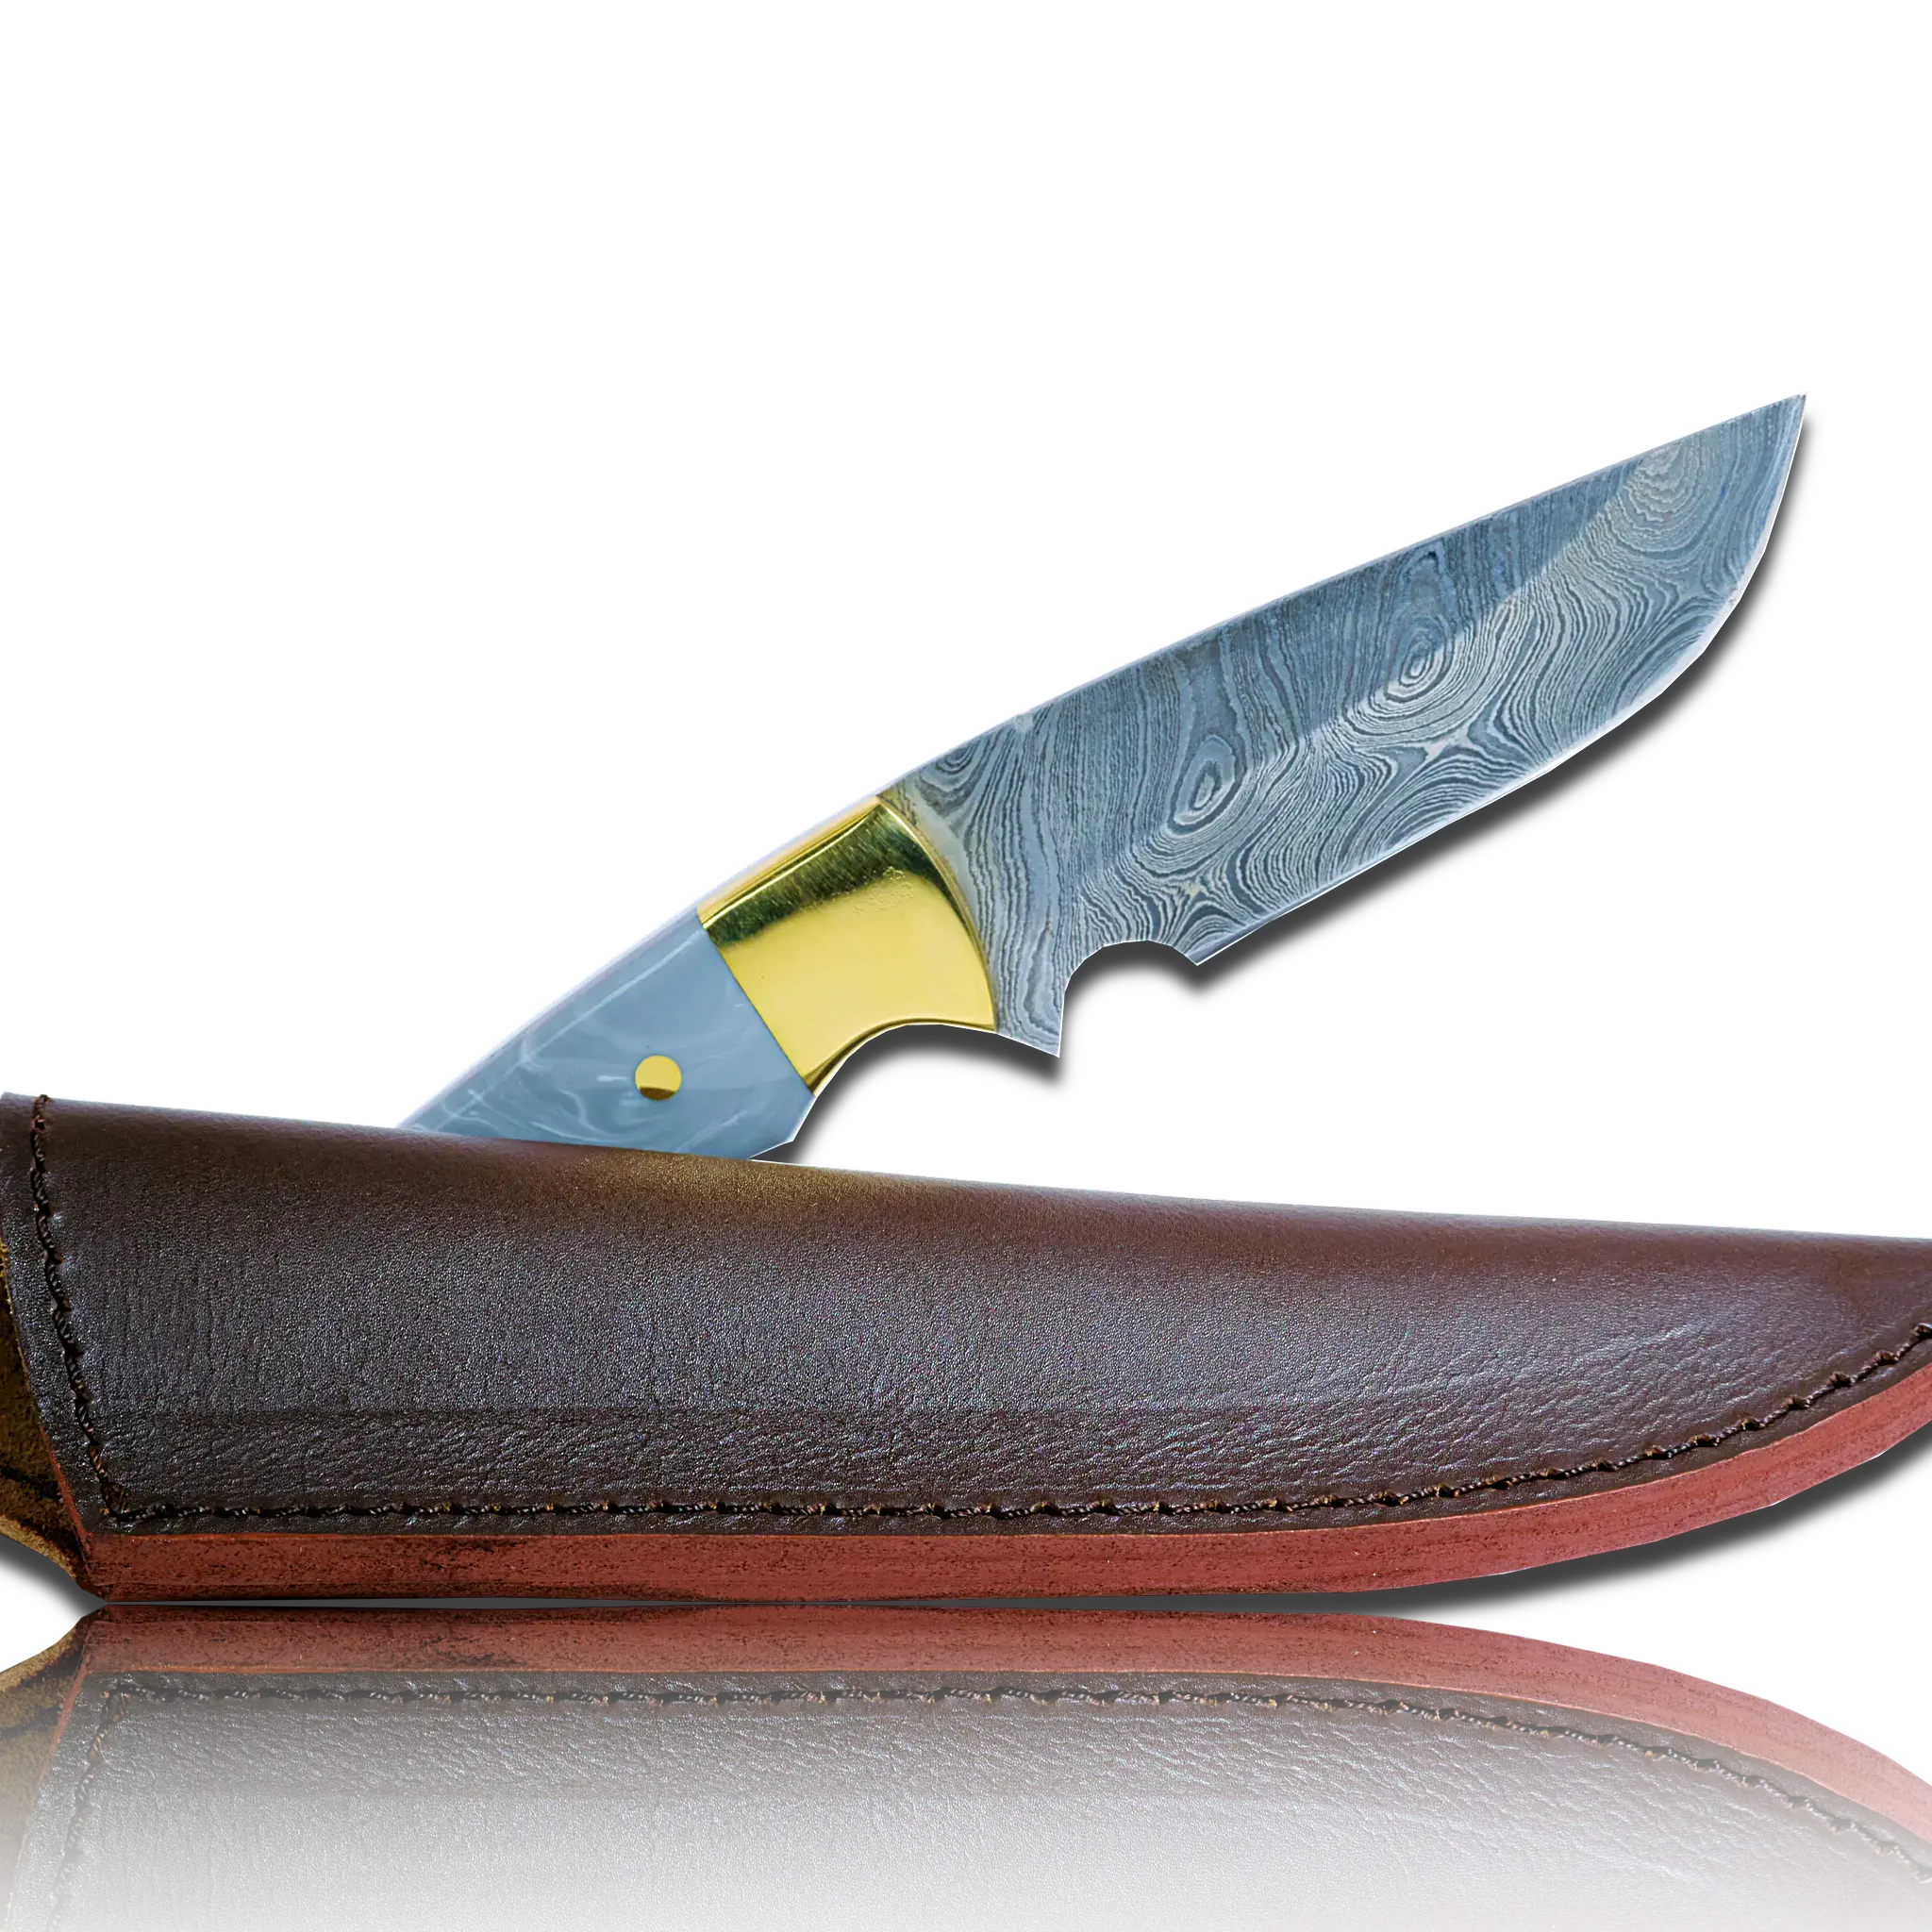 Original Kaito Damascus Steel Skinner Knife 4 inch blade with Premium Leather Sheath